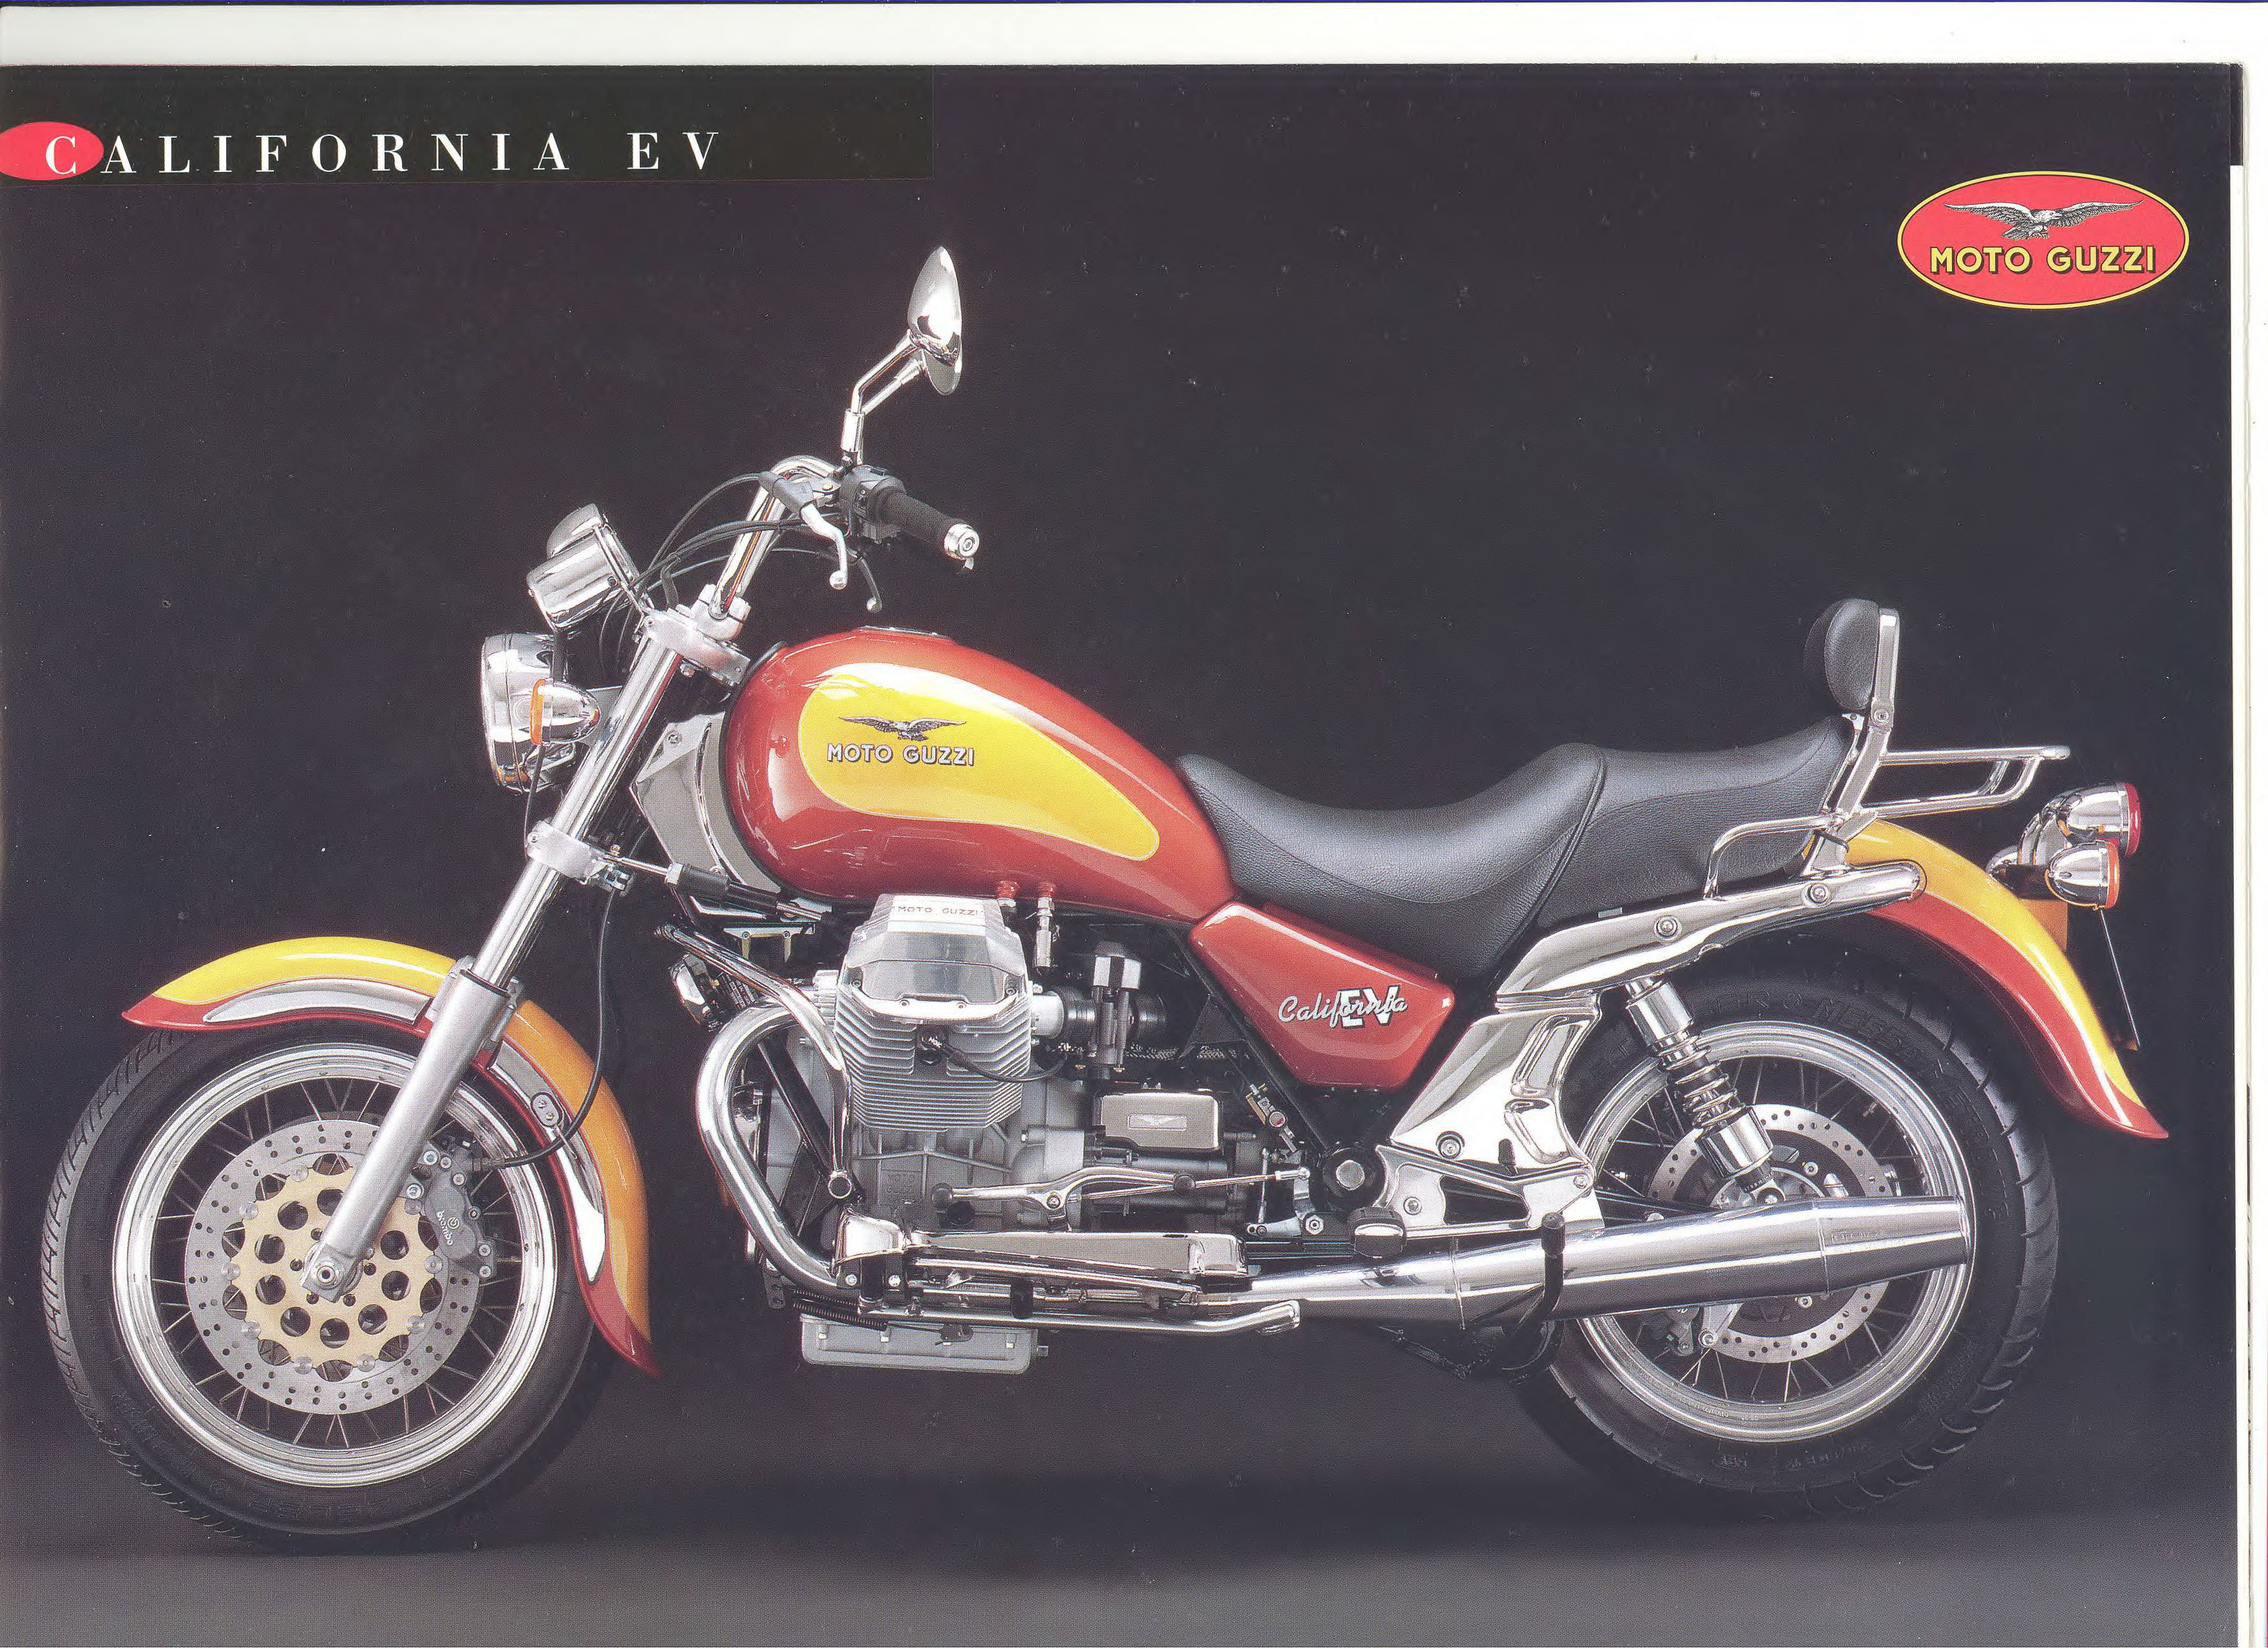 Moto Guzzi factory brochure: California EV